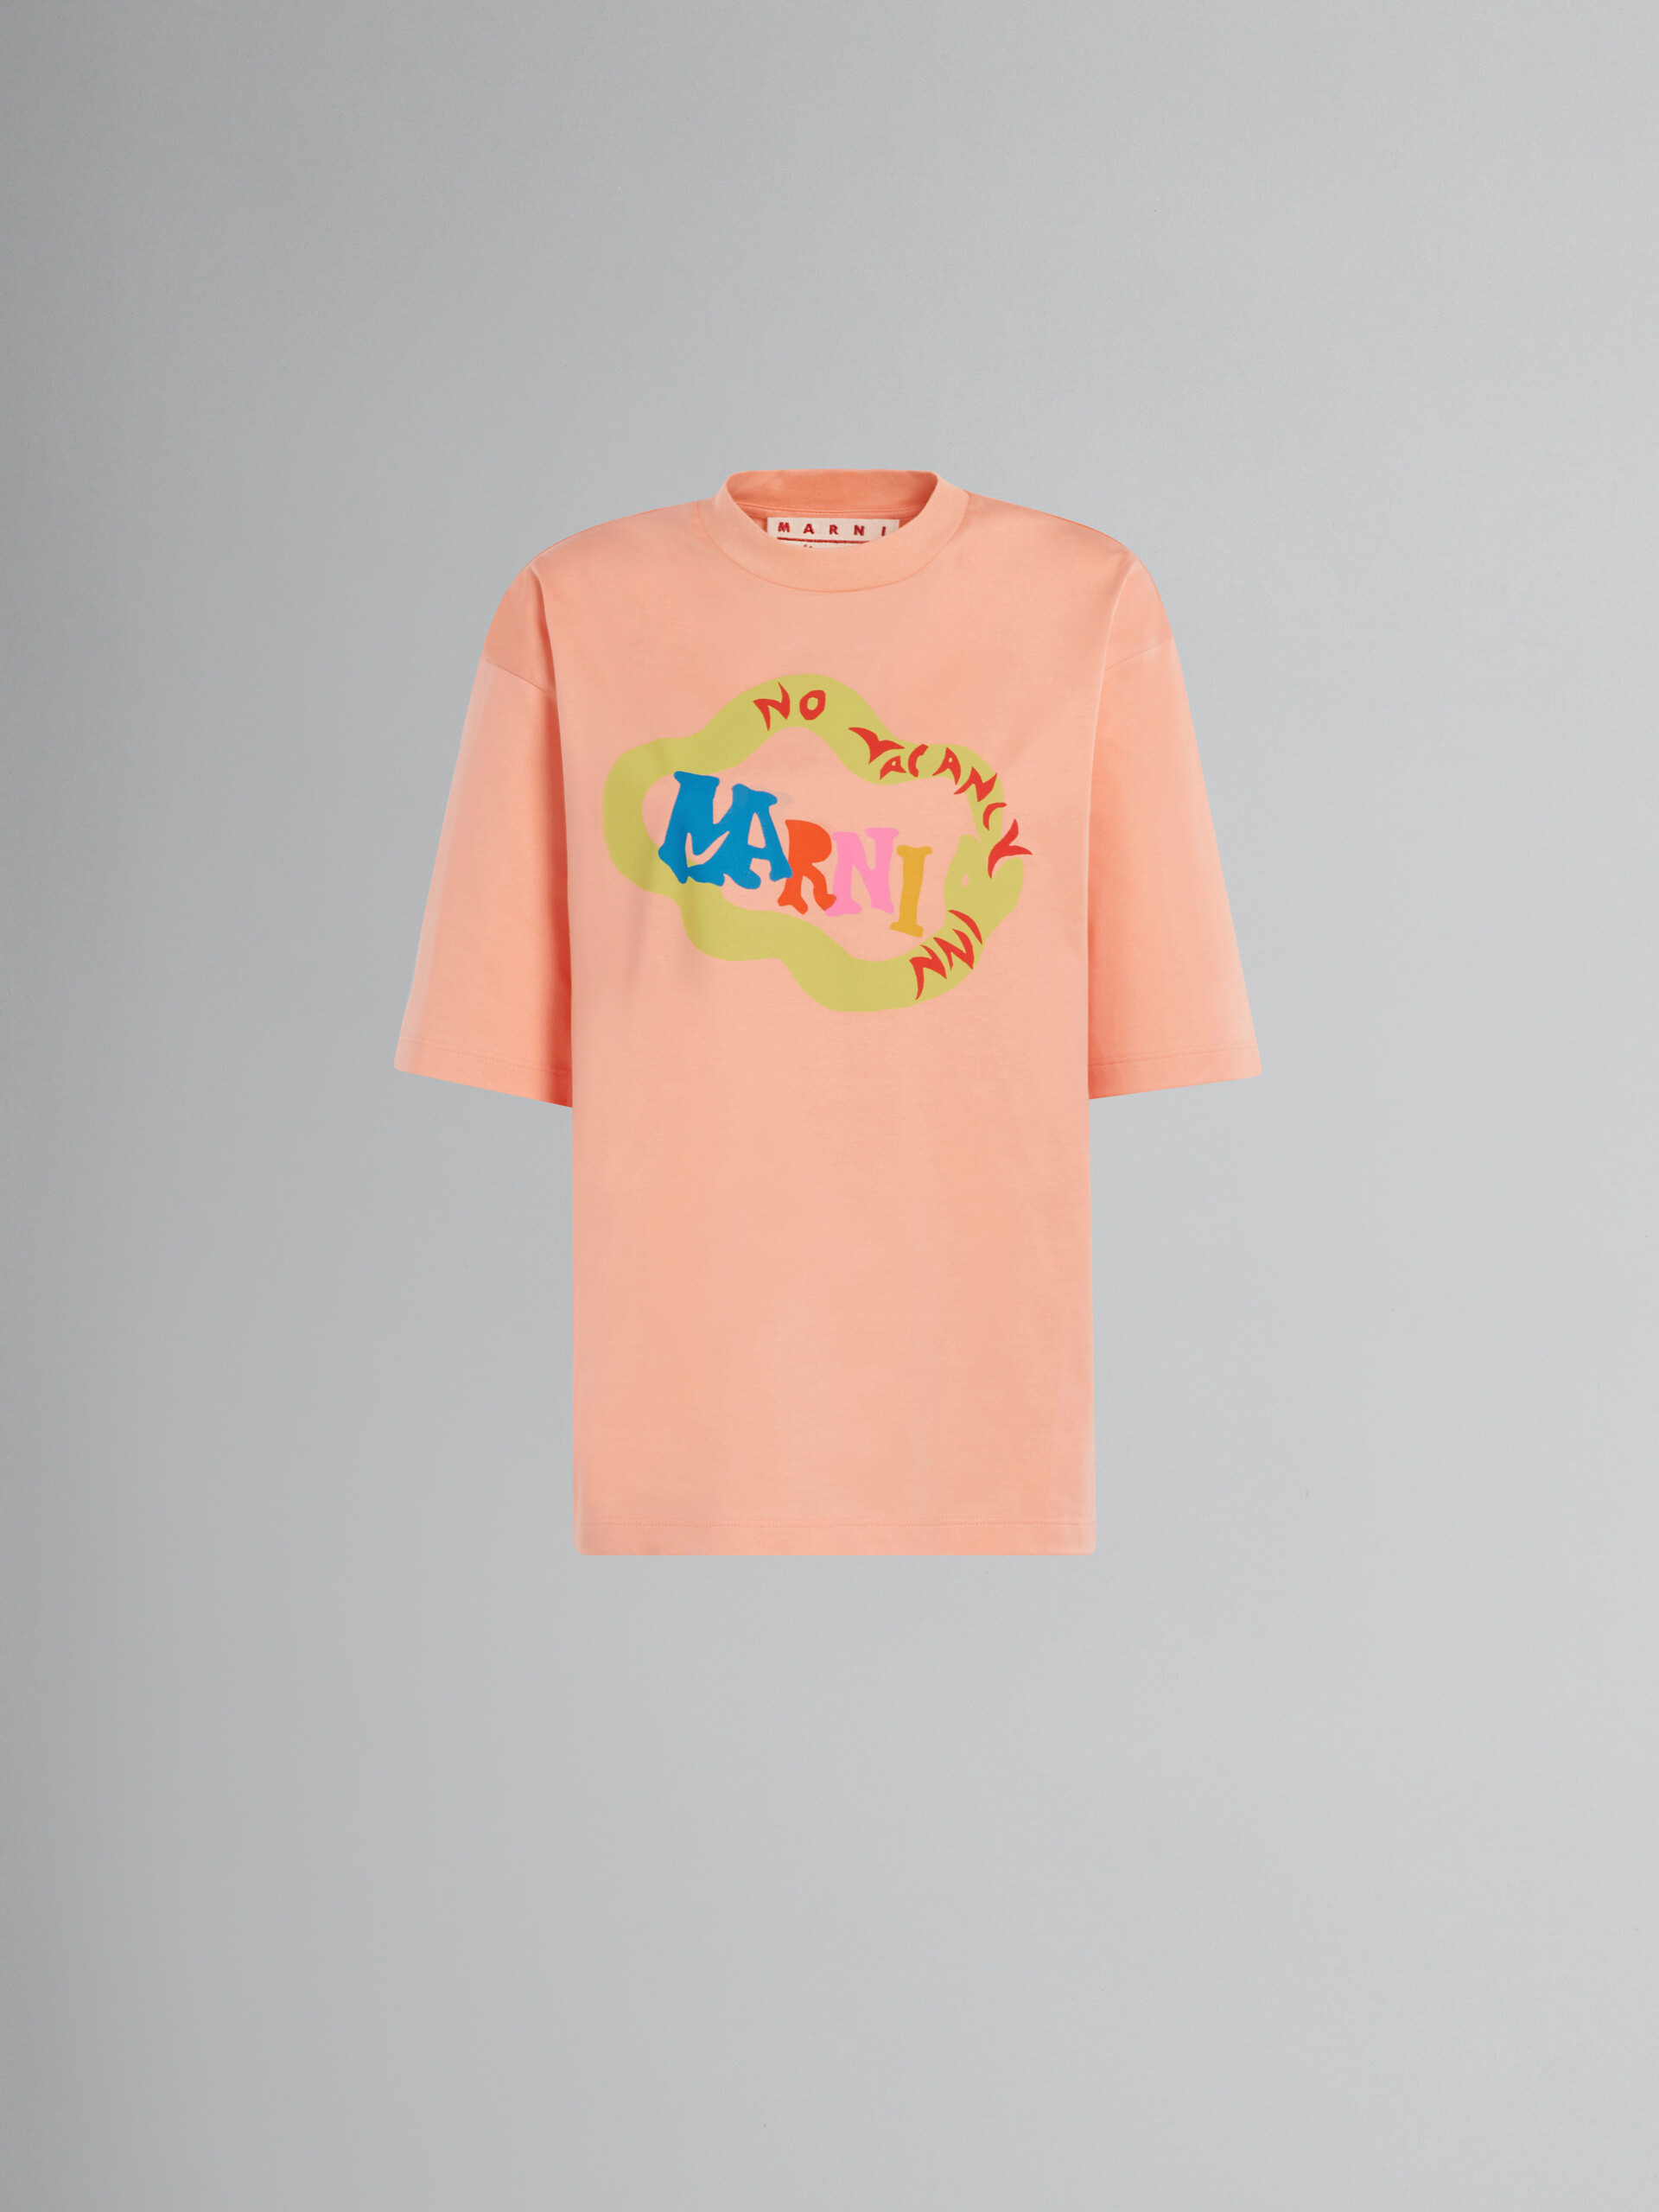 Marni x No Vacancy Inn - Light peach T-shirt in bio cotton jersey with snake logo print - T-shirts - Image 1